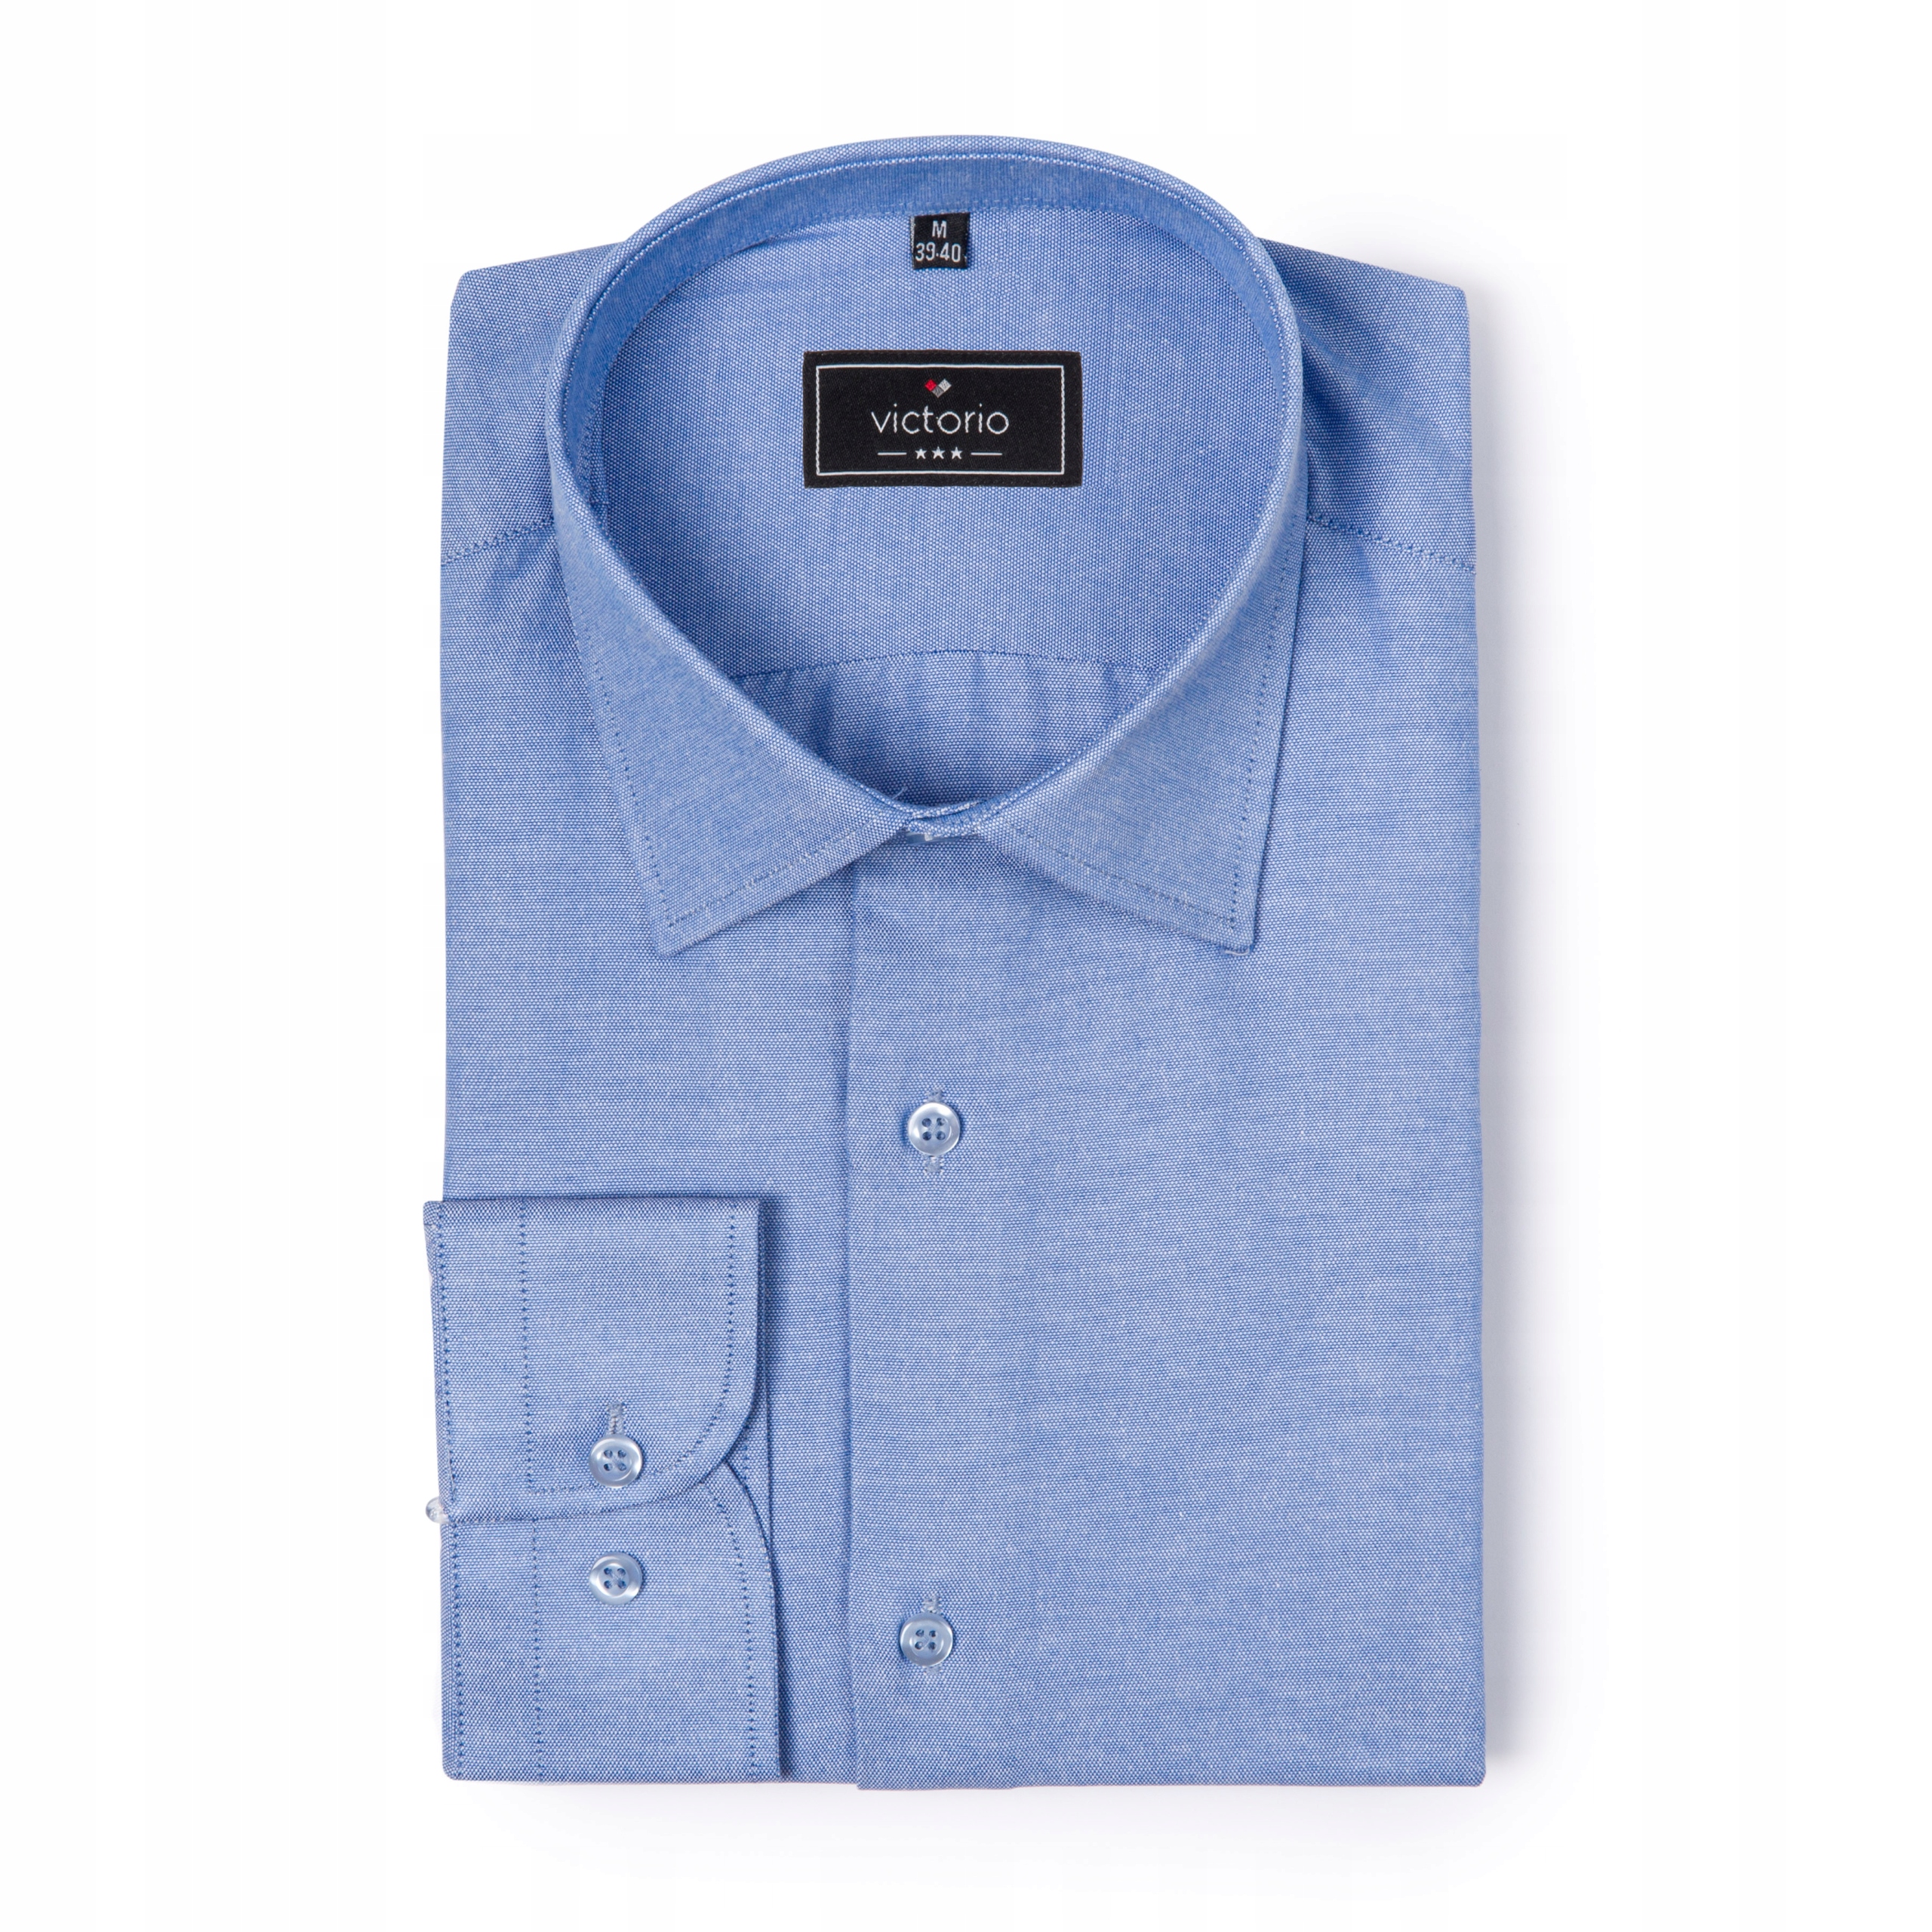 Koszula męska niebieska z tkaniny strukturalnej OXFORD regular XL